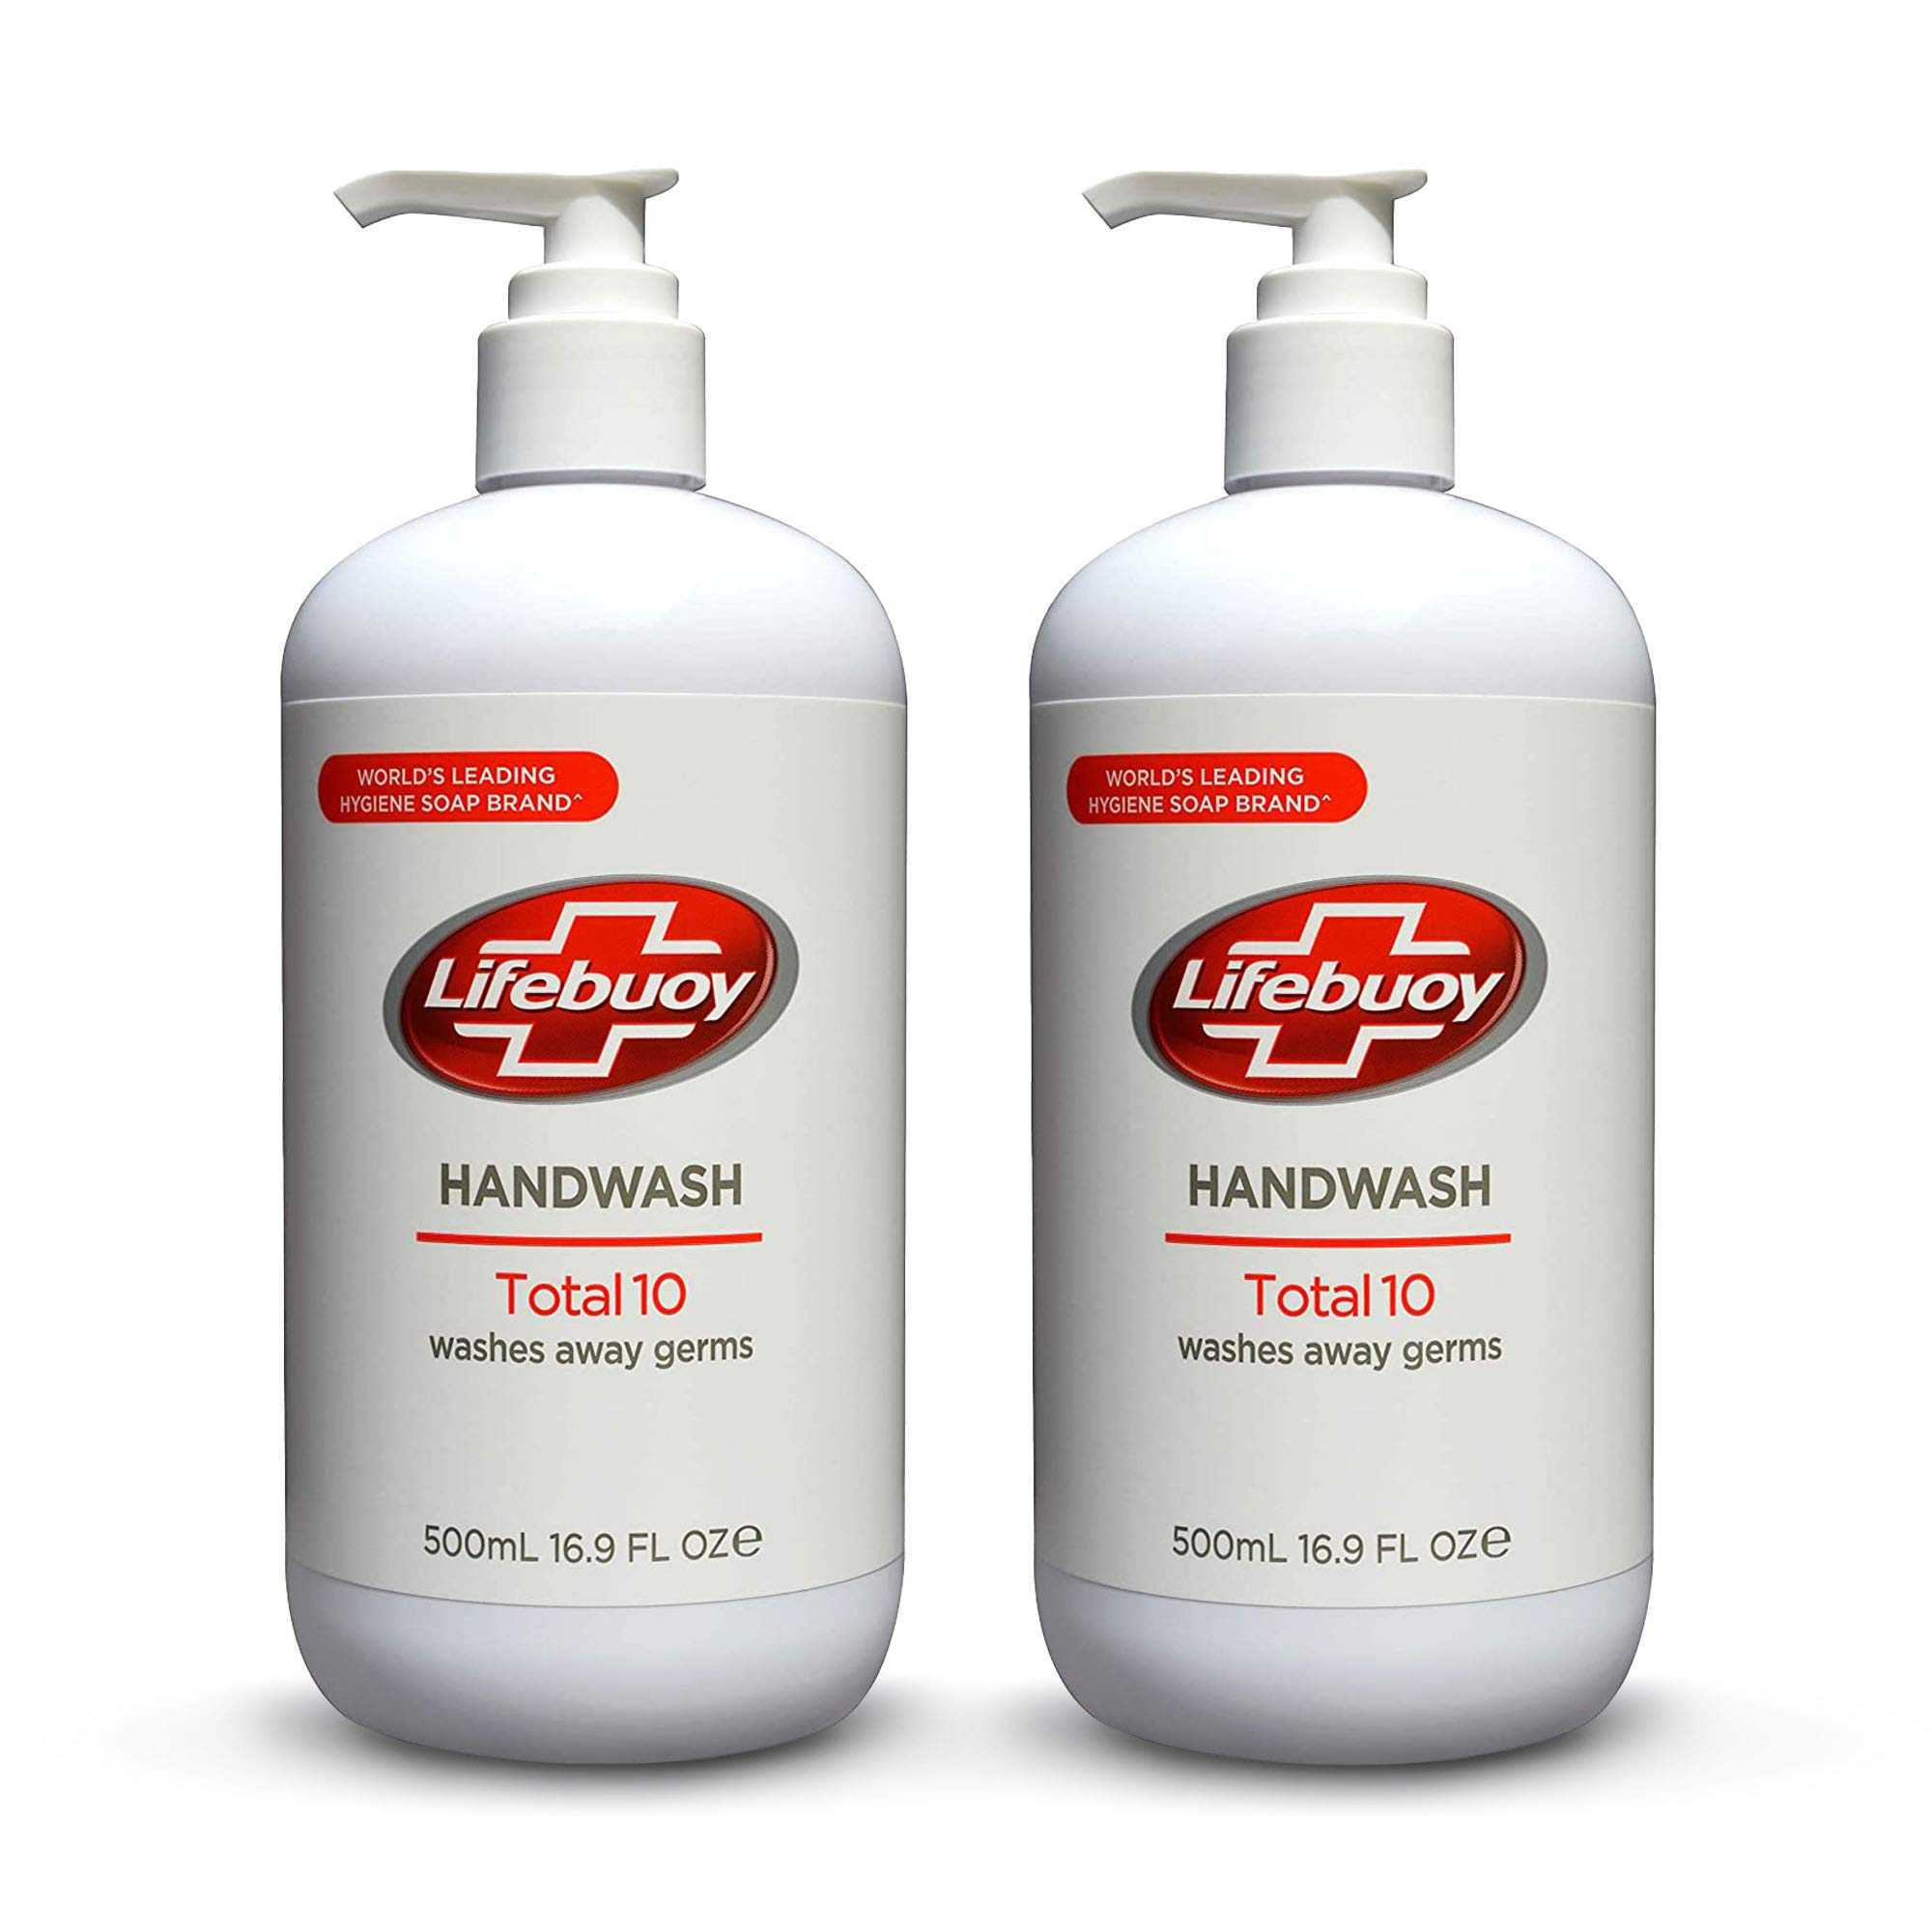 Lifebuoy bar soap hand wash study (RCT)